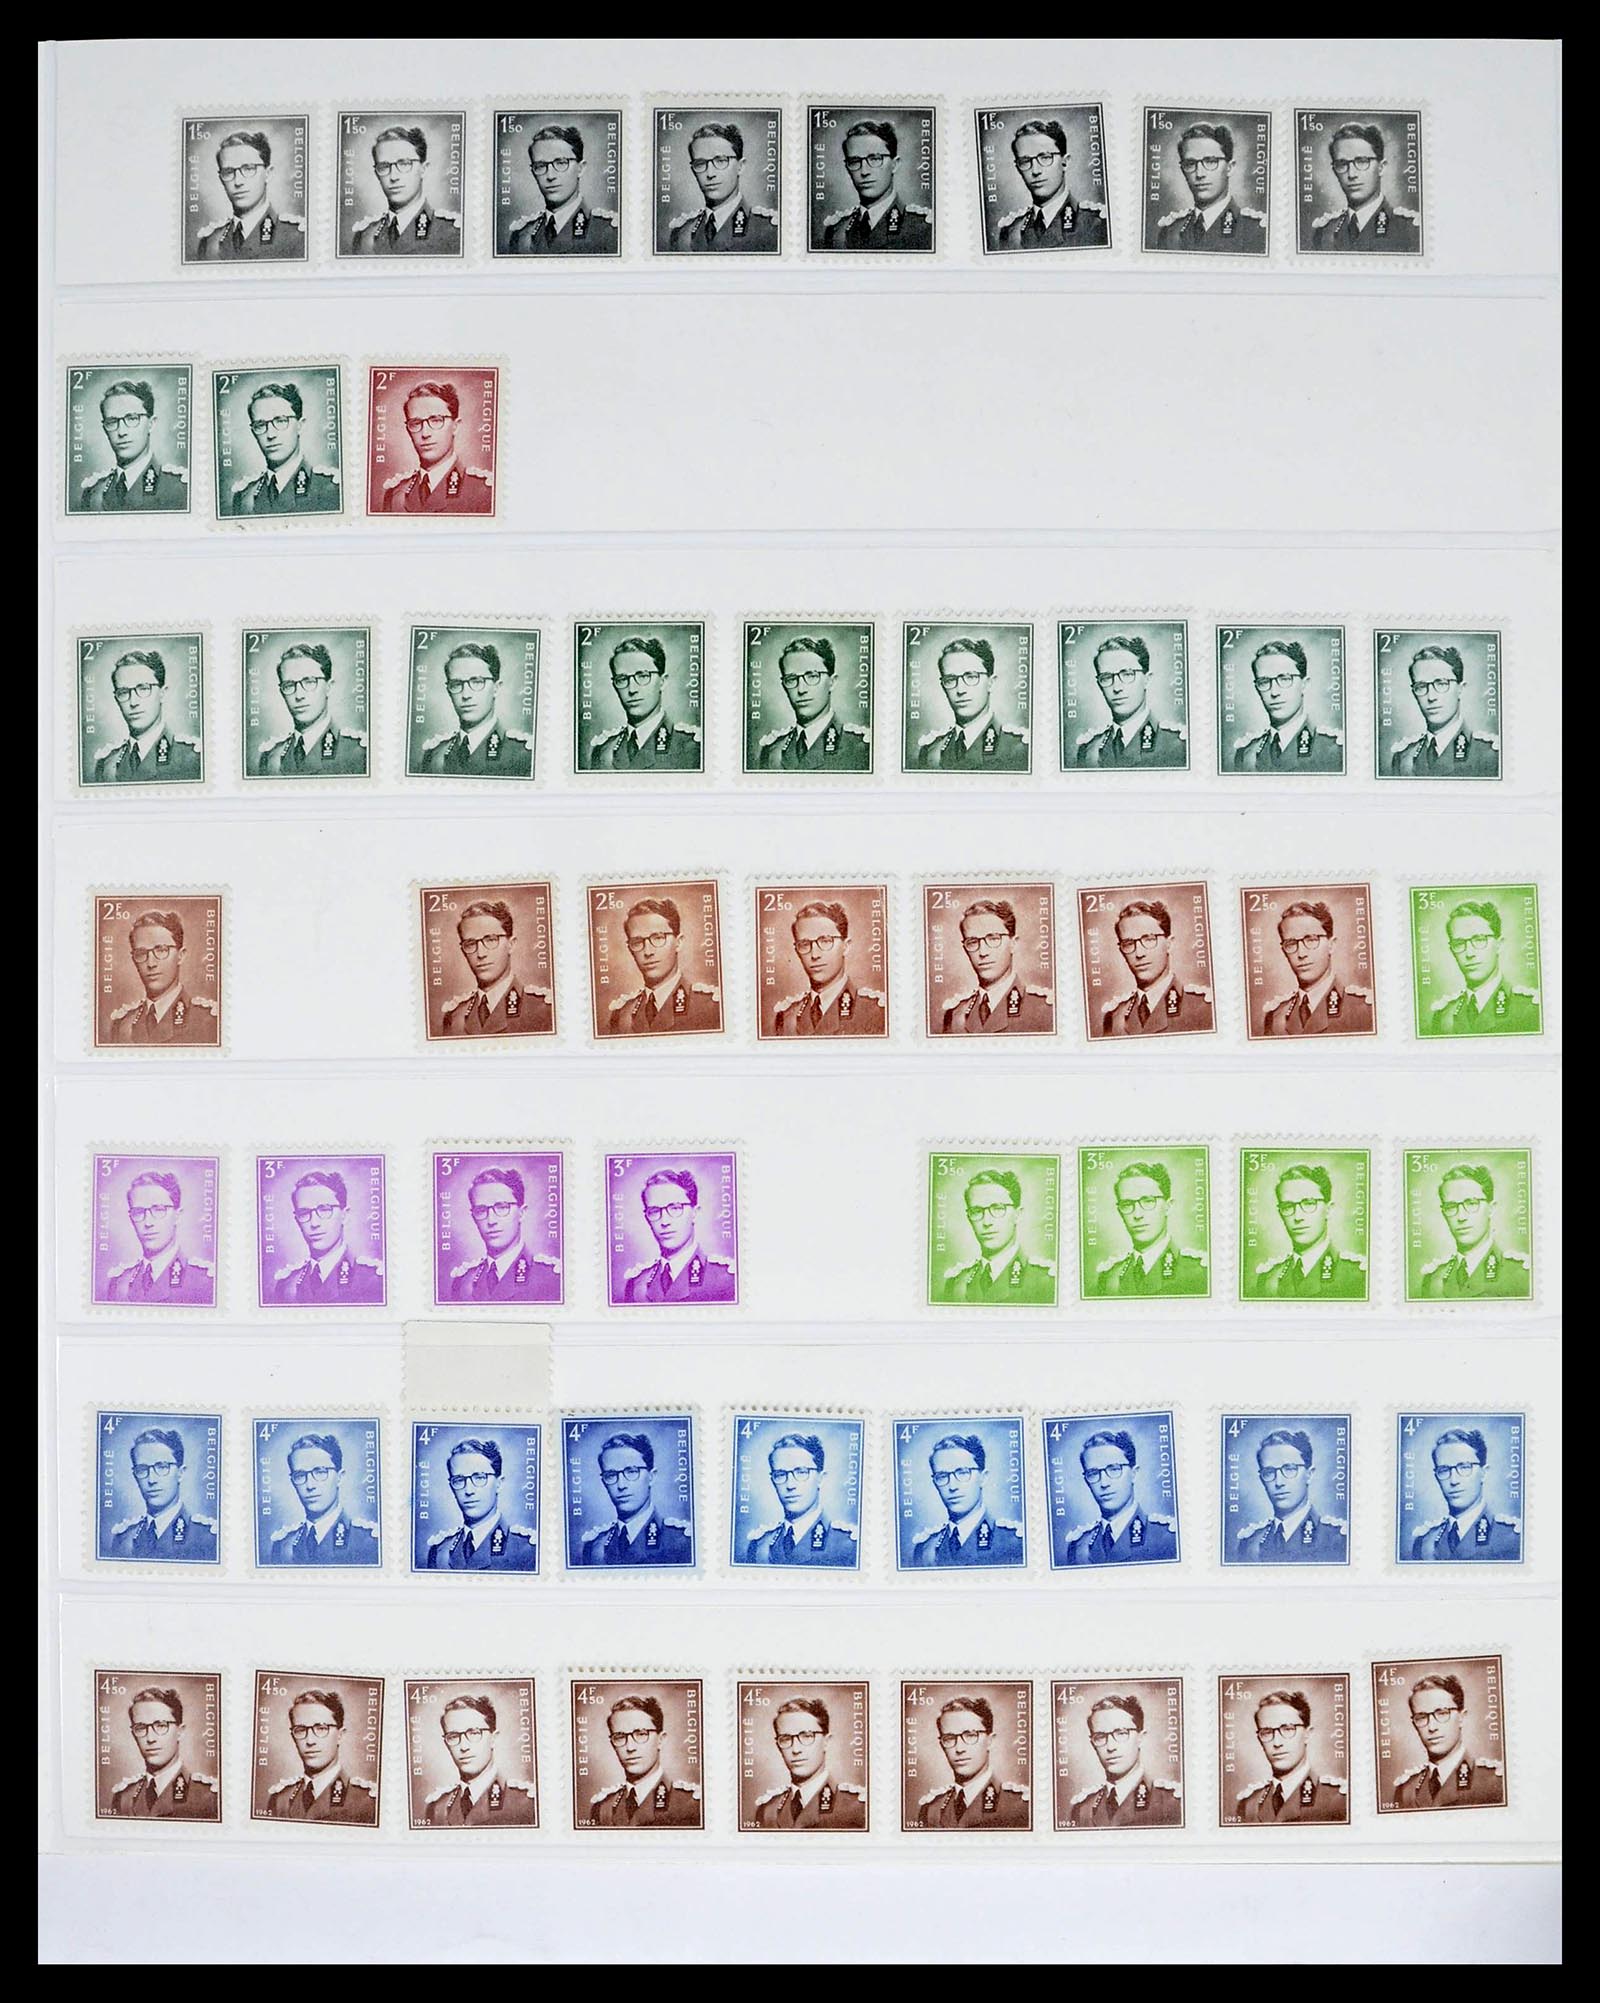 39229 0003 - Stamp collection 39229 Belgium Boudewijn with glasses 1952-1975.